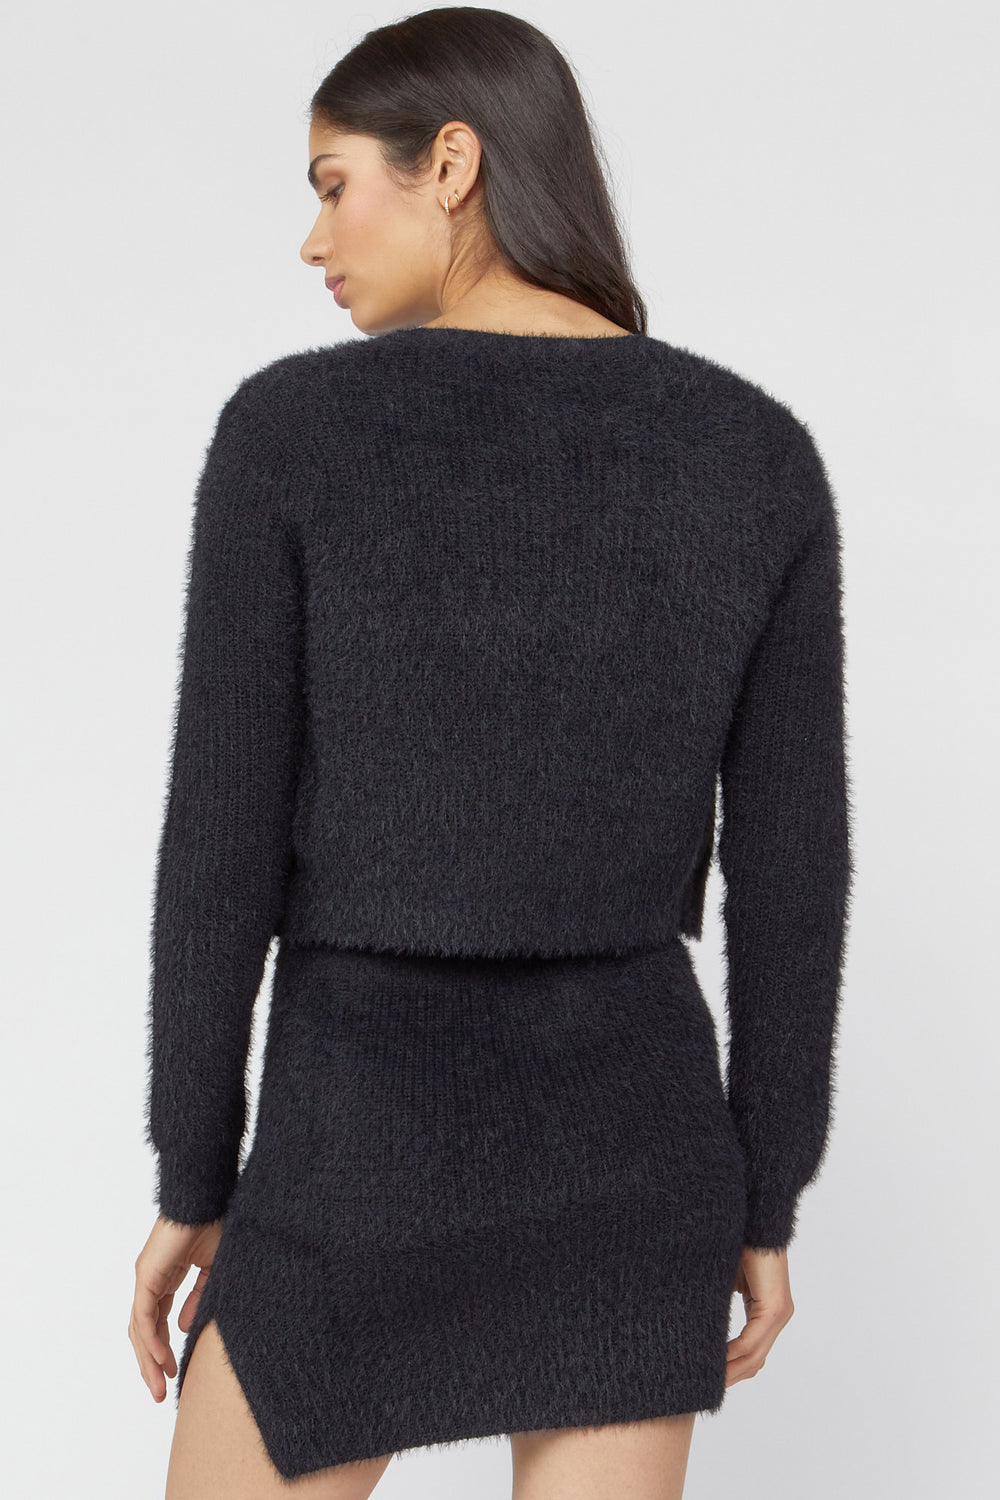 Fuzzy Tank & Cardigan Sweater Set Black